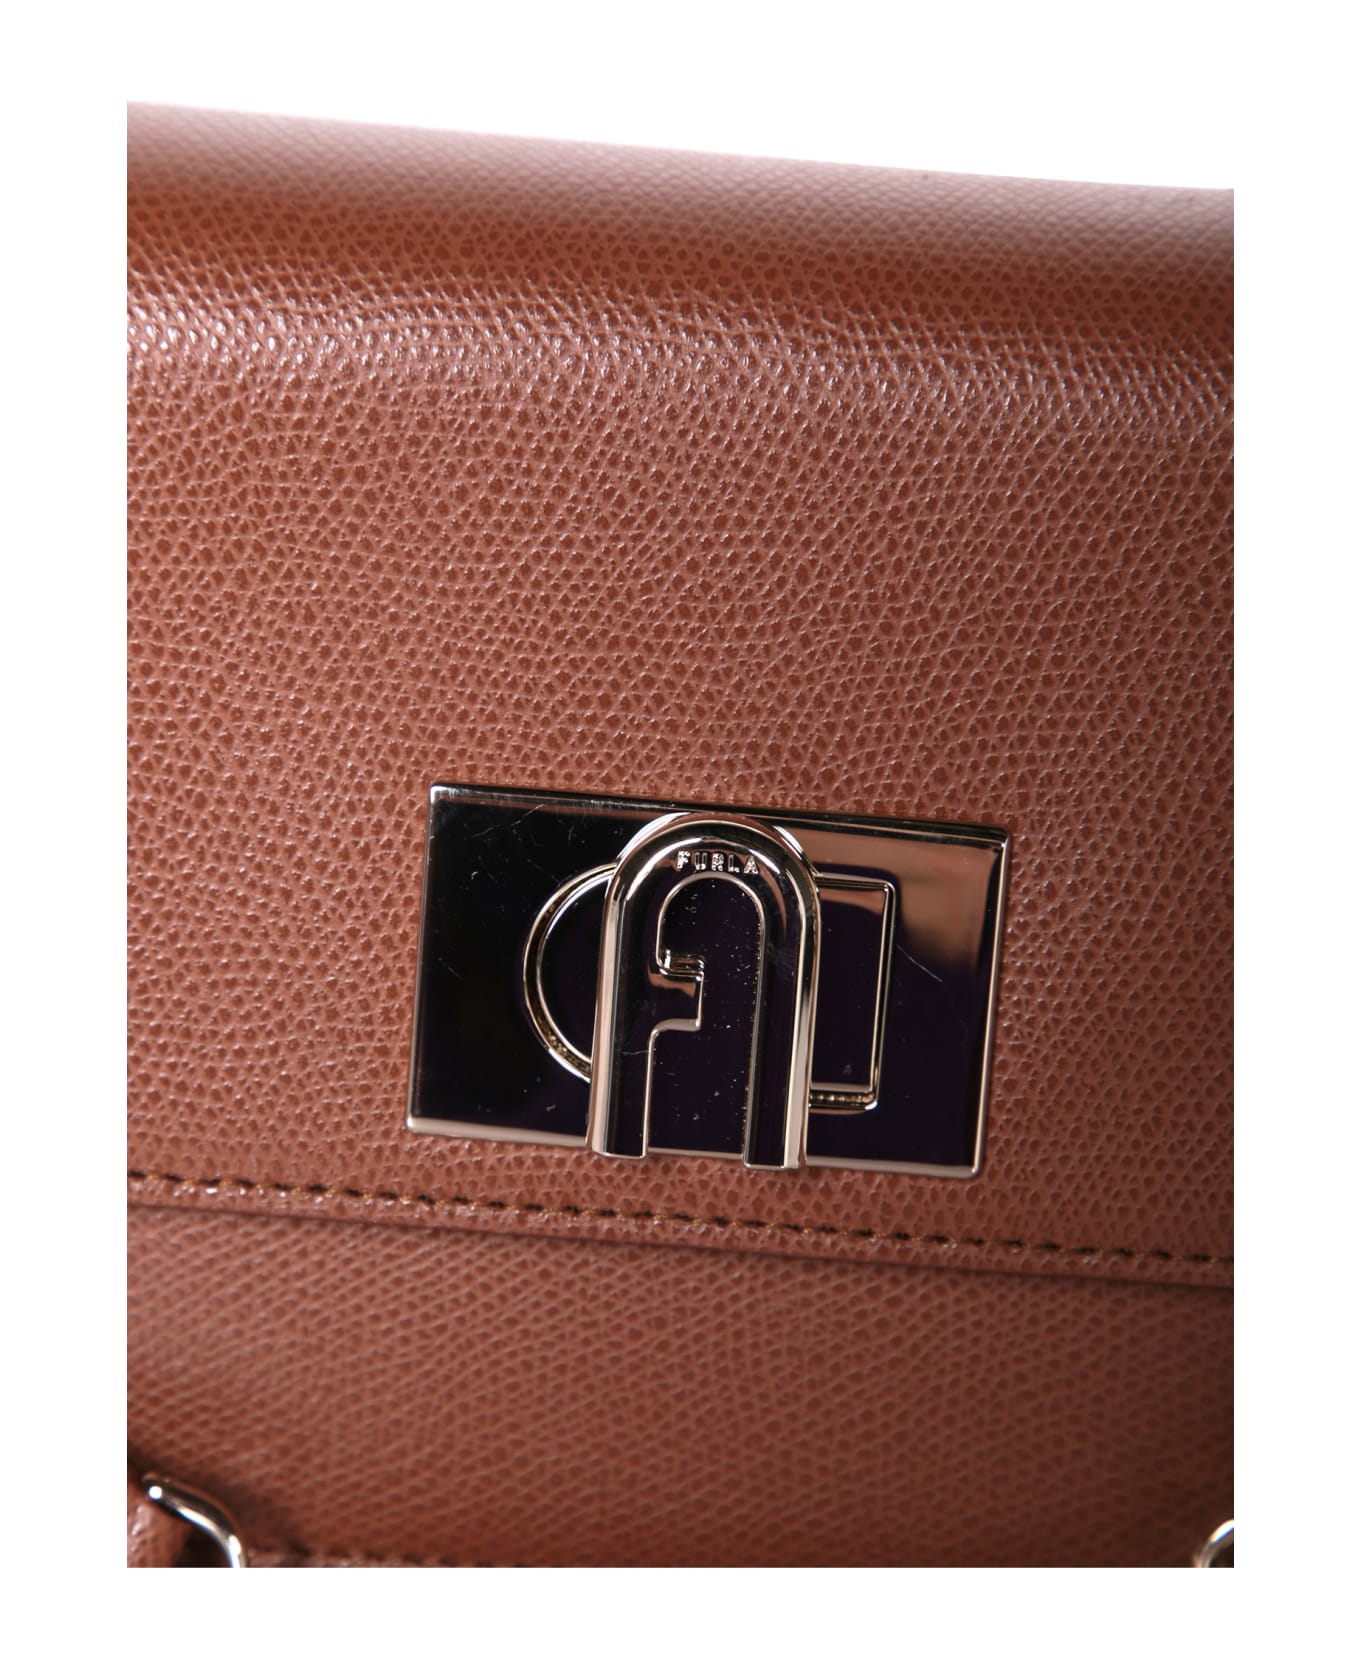 Furla 1927 Cognac Shoulder Bag - Brown